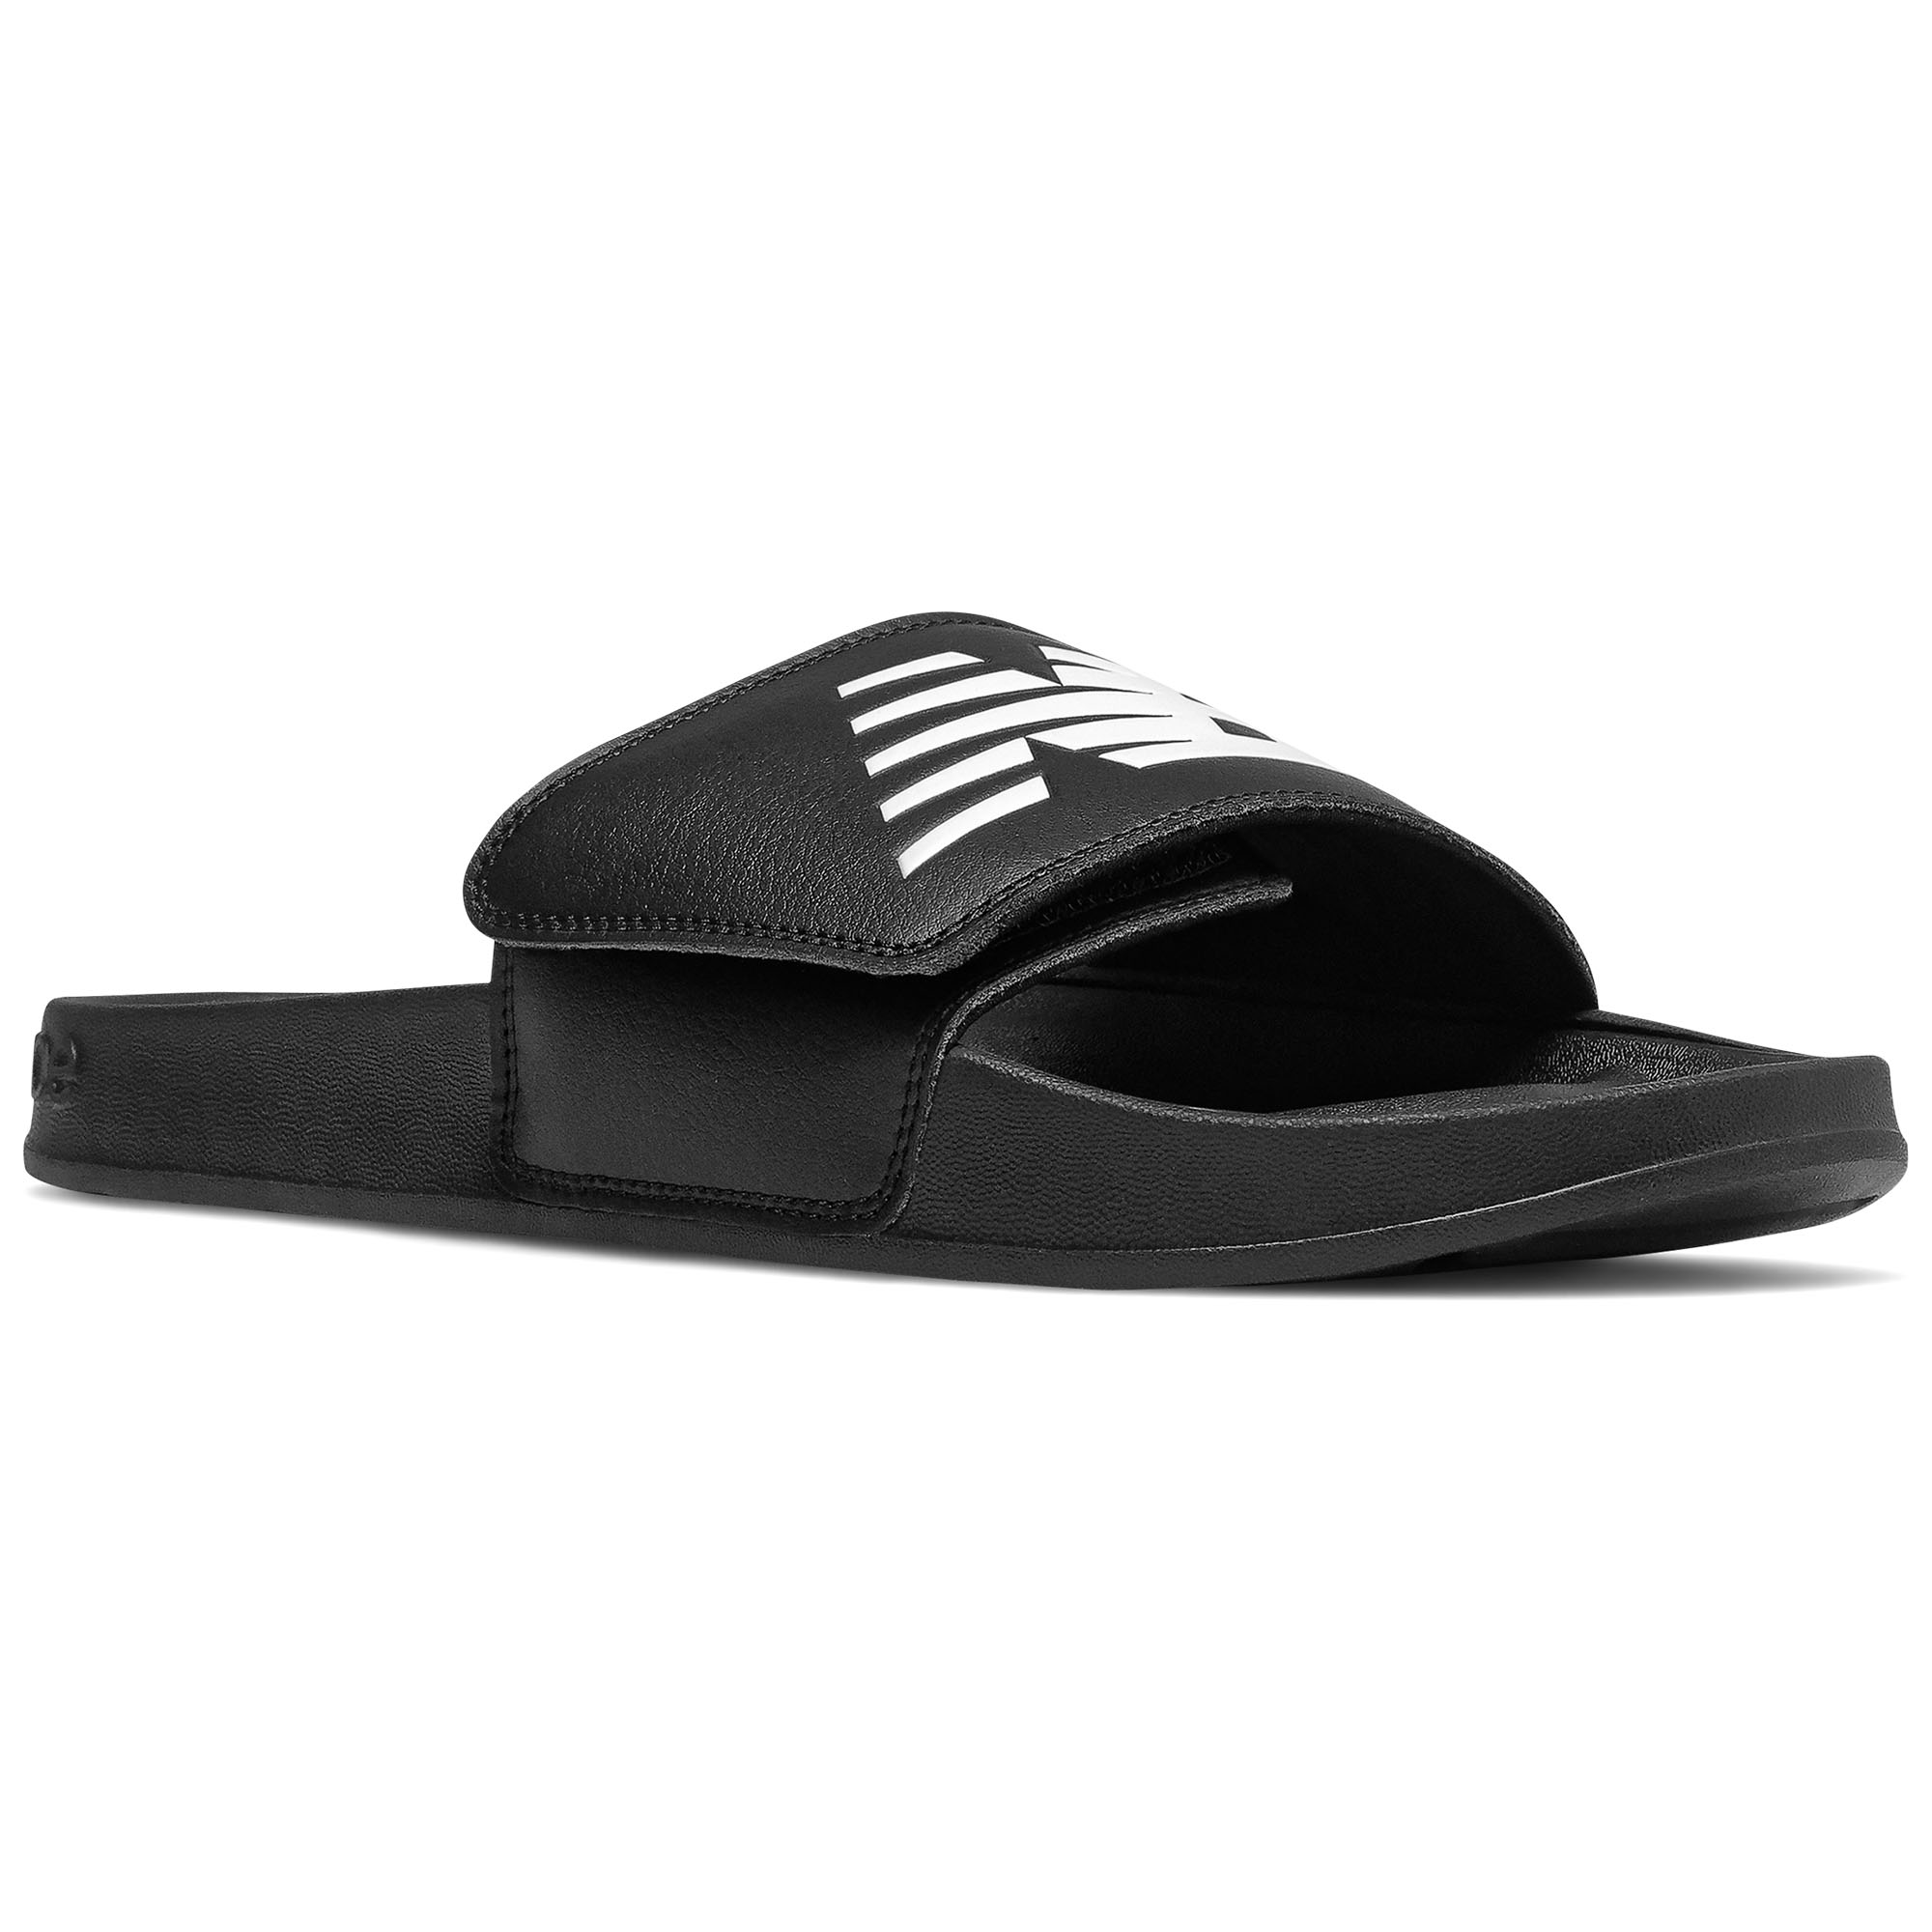 new balance black flip flops